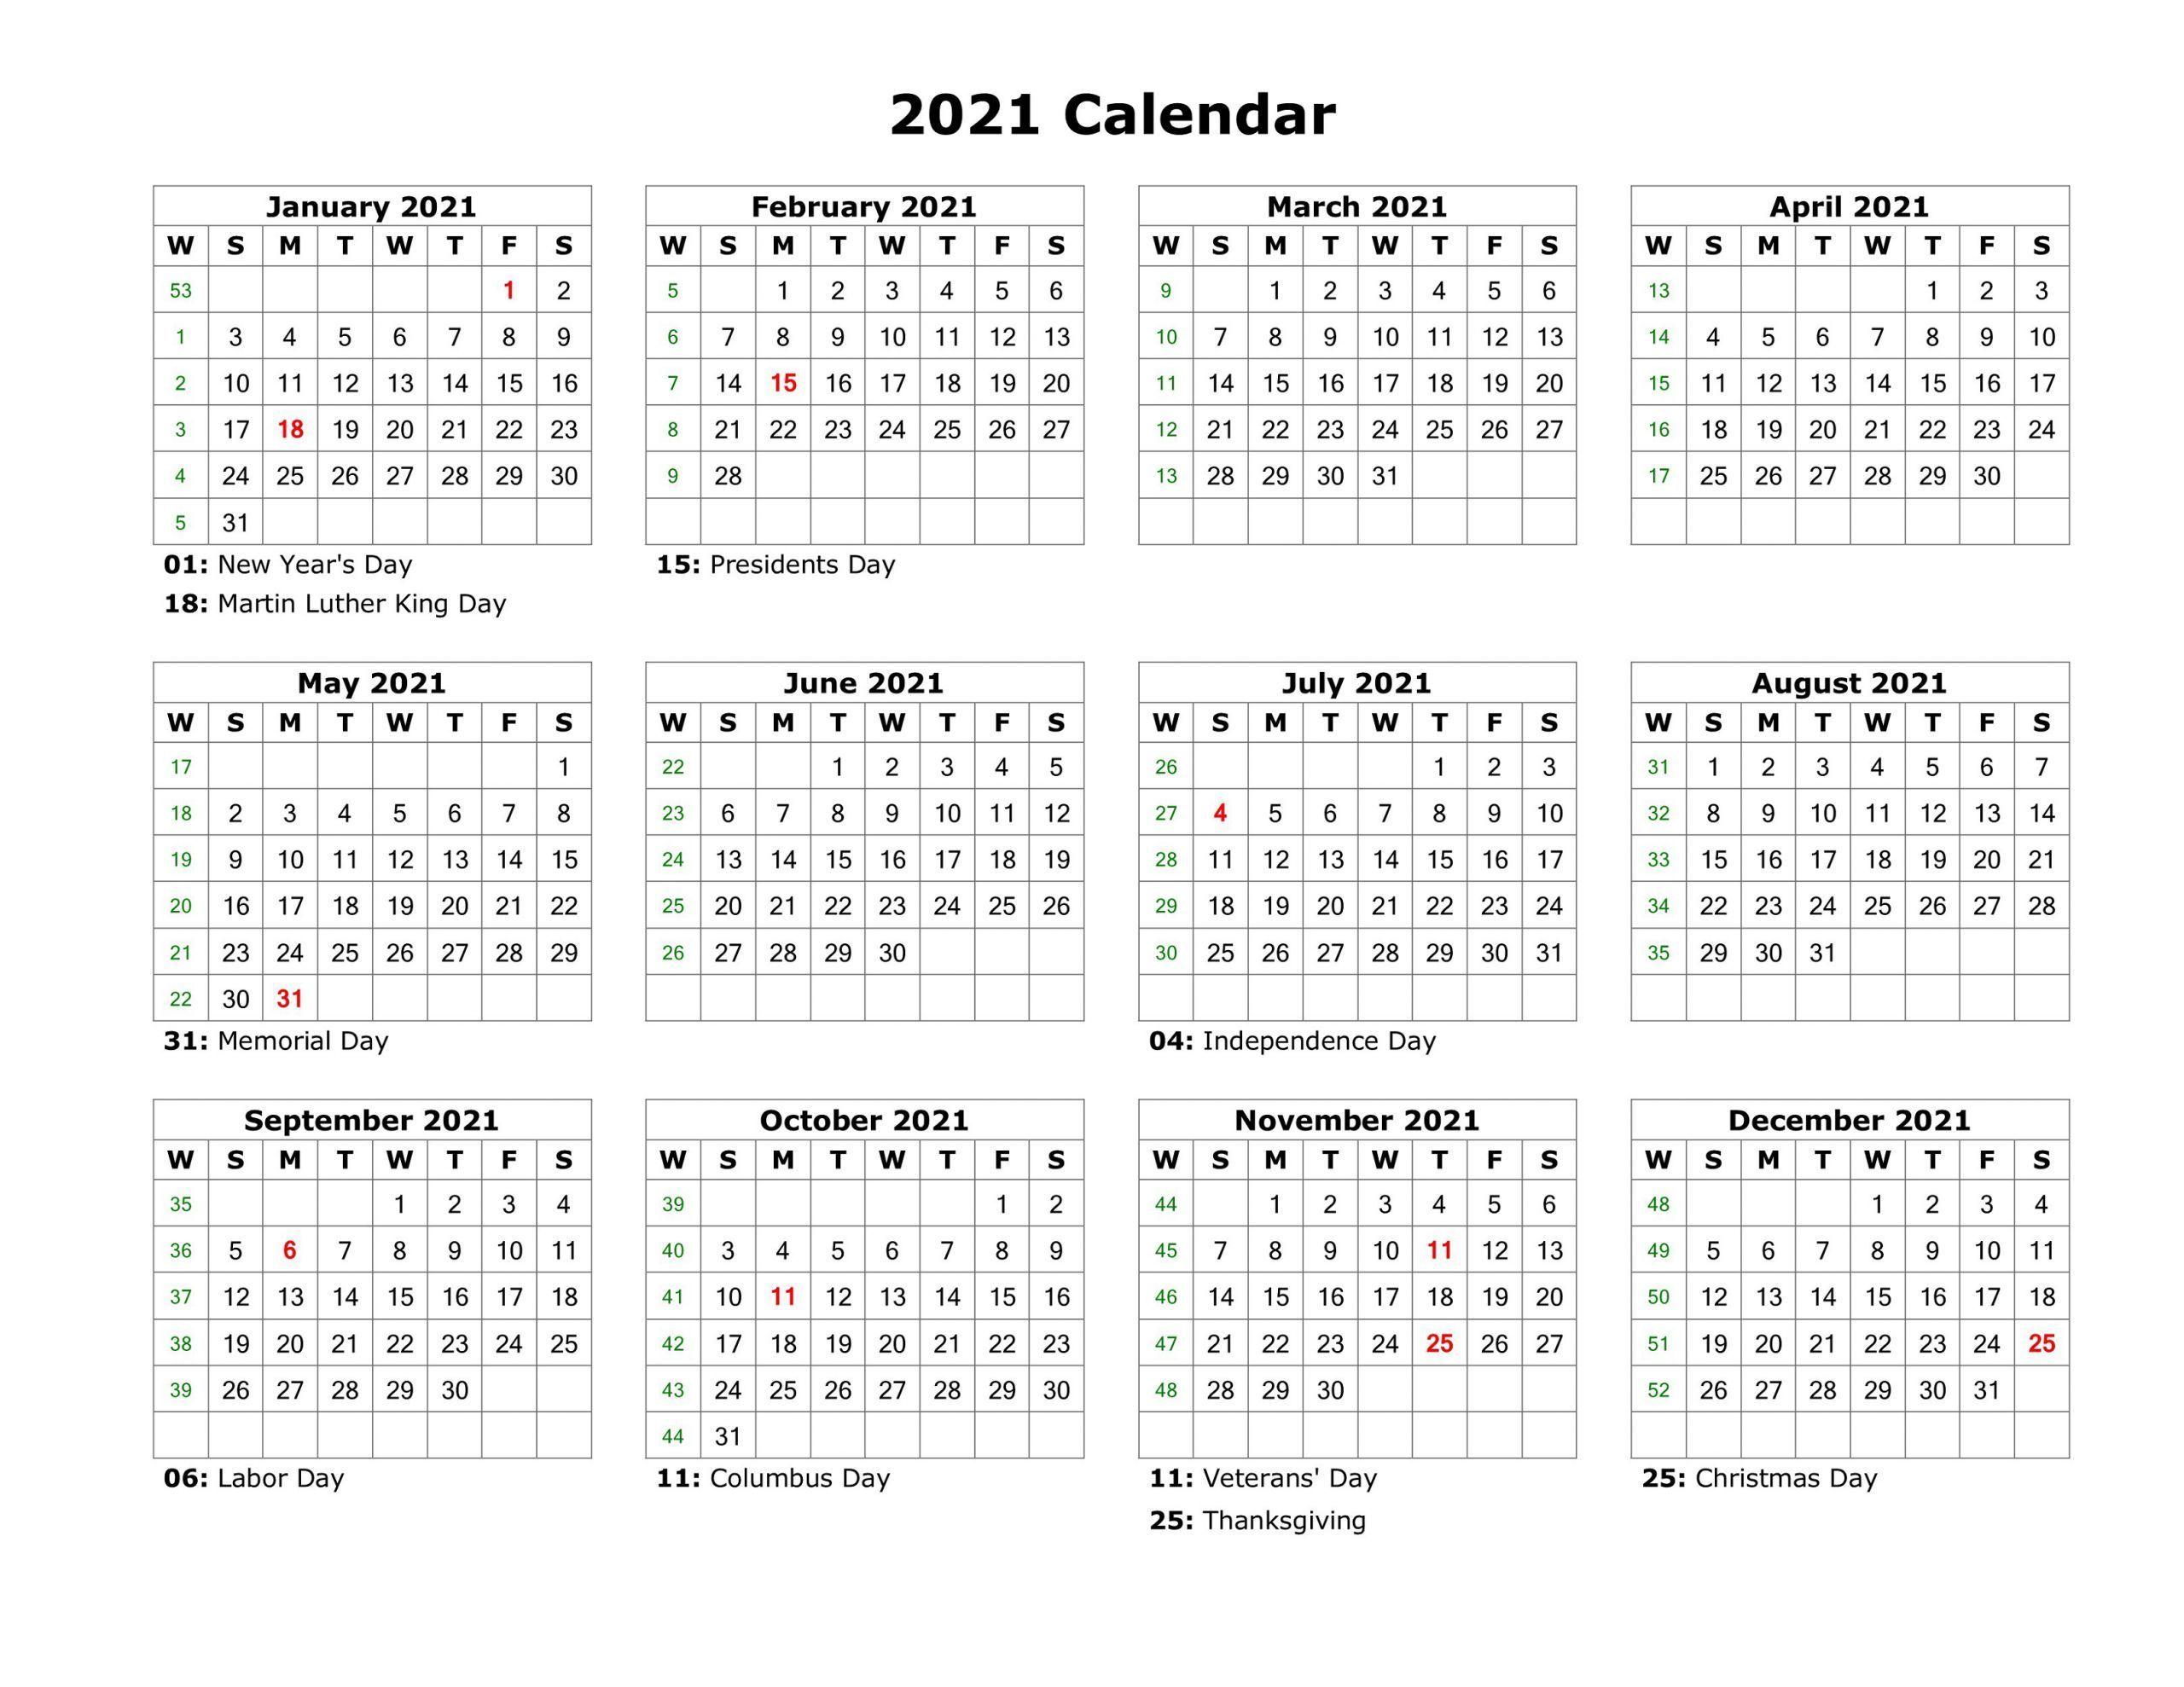 January 2021 Calendar Wallpapers - Top Free January 2021 Calendar ...